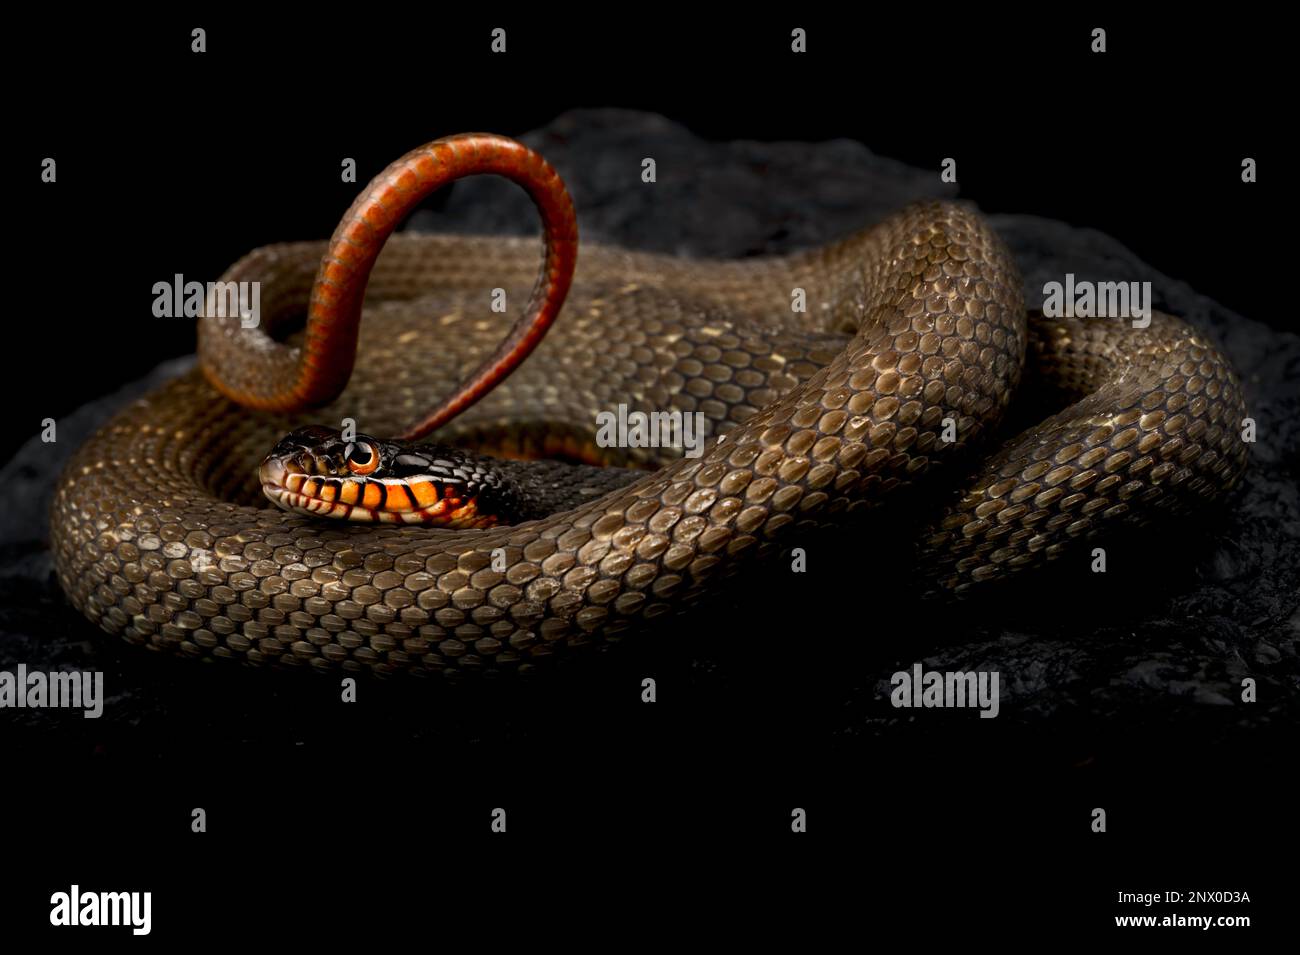 Redbelly water snake (Nerodia erythrogaster) Stock Photo